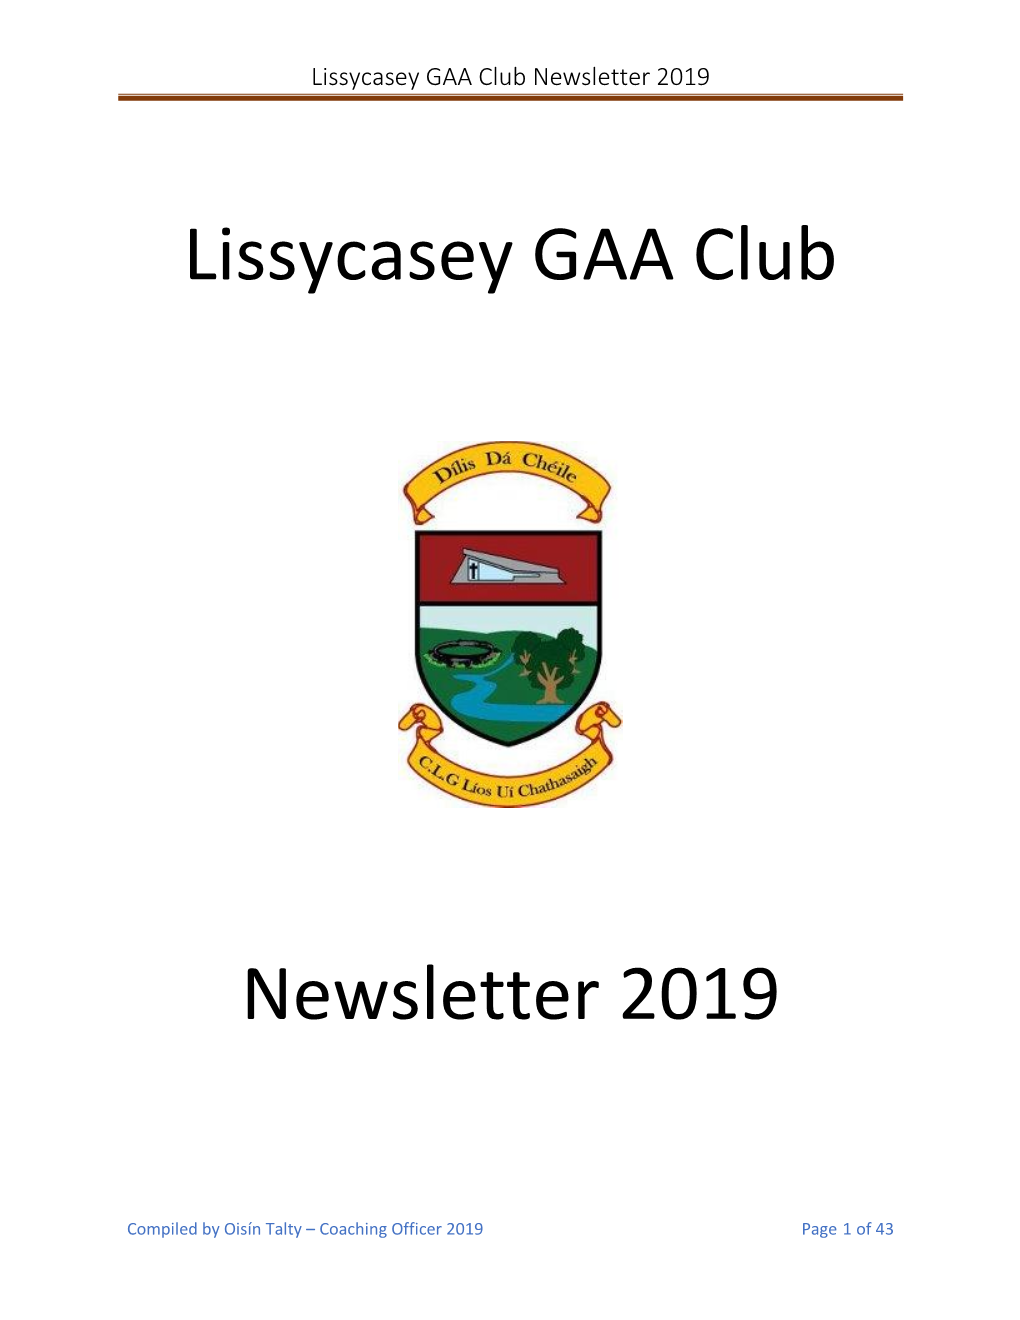 Lissycasey GAA Club Newsletter 2019